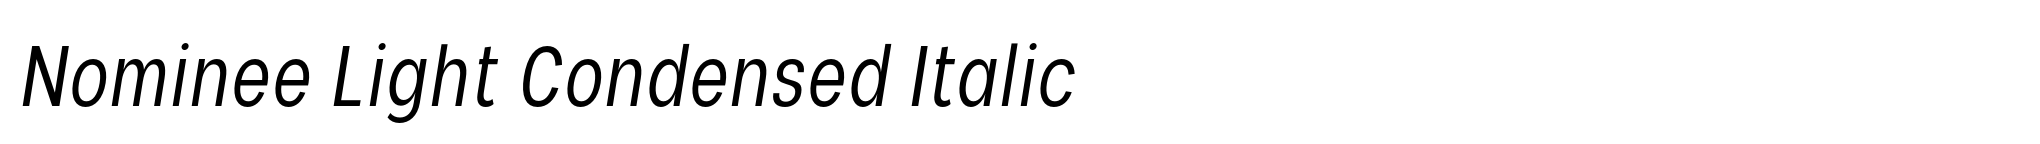 Nominee Light Condensed Italic image